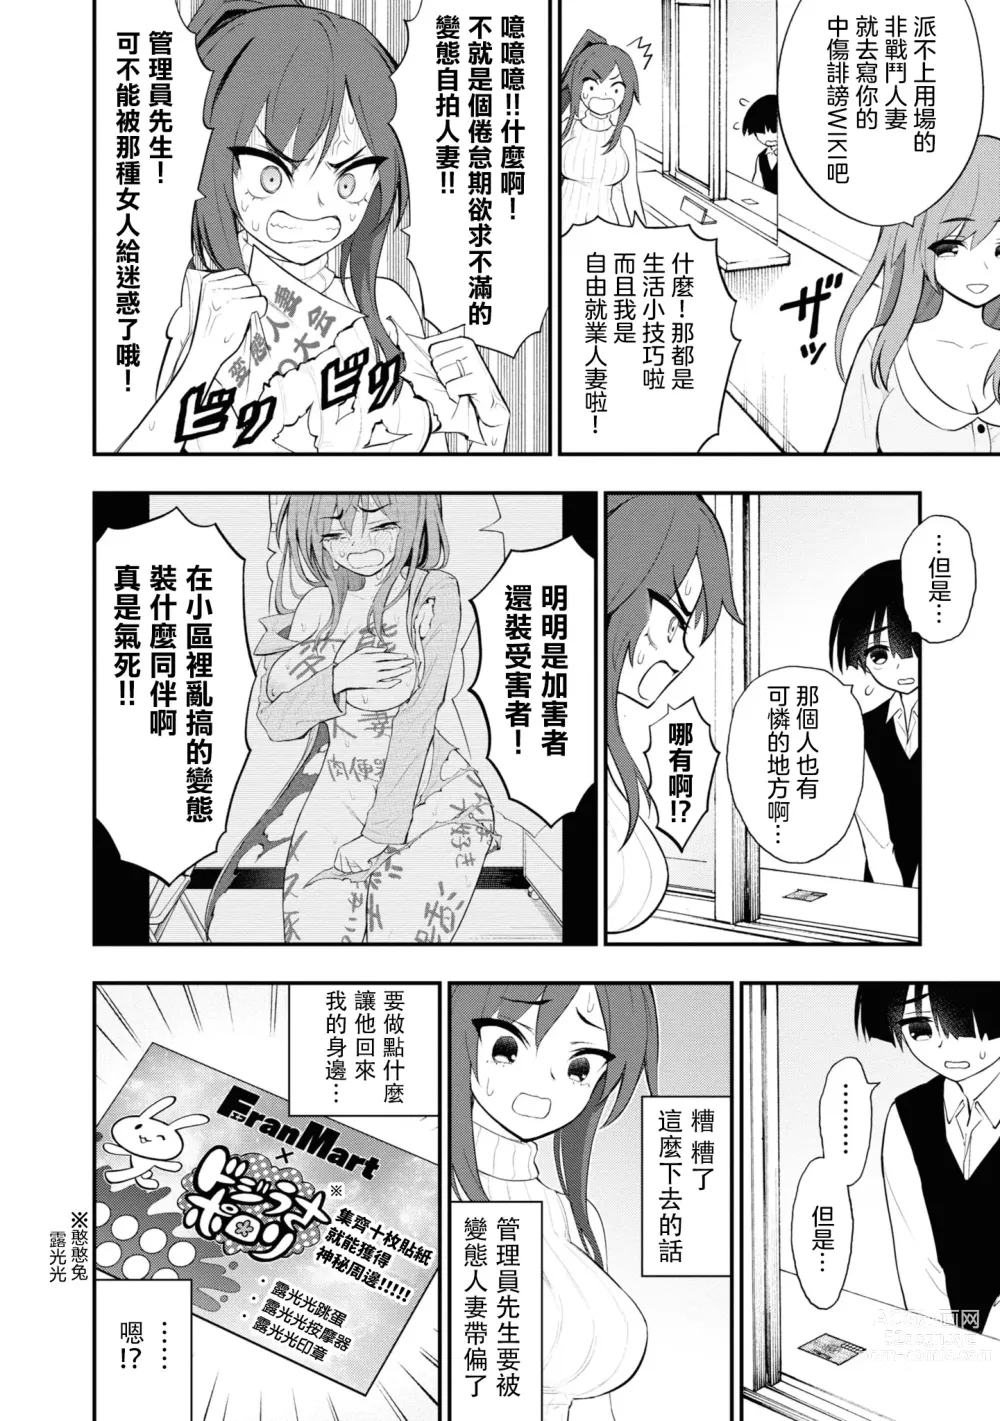 Page 3 of manga 淫獄小區 15-19話